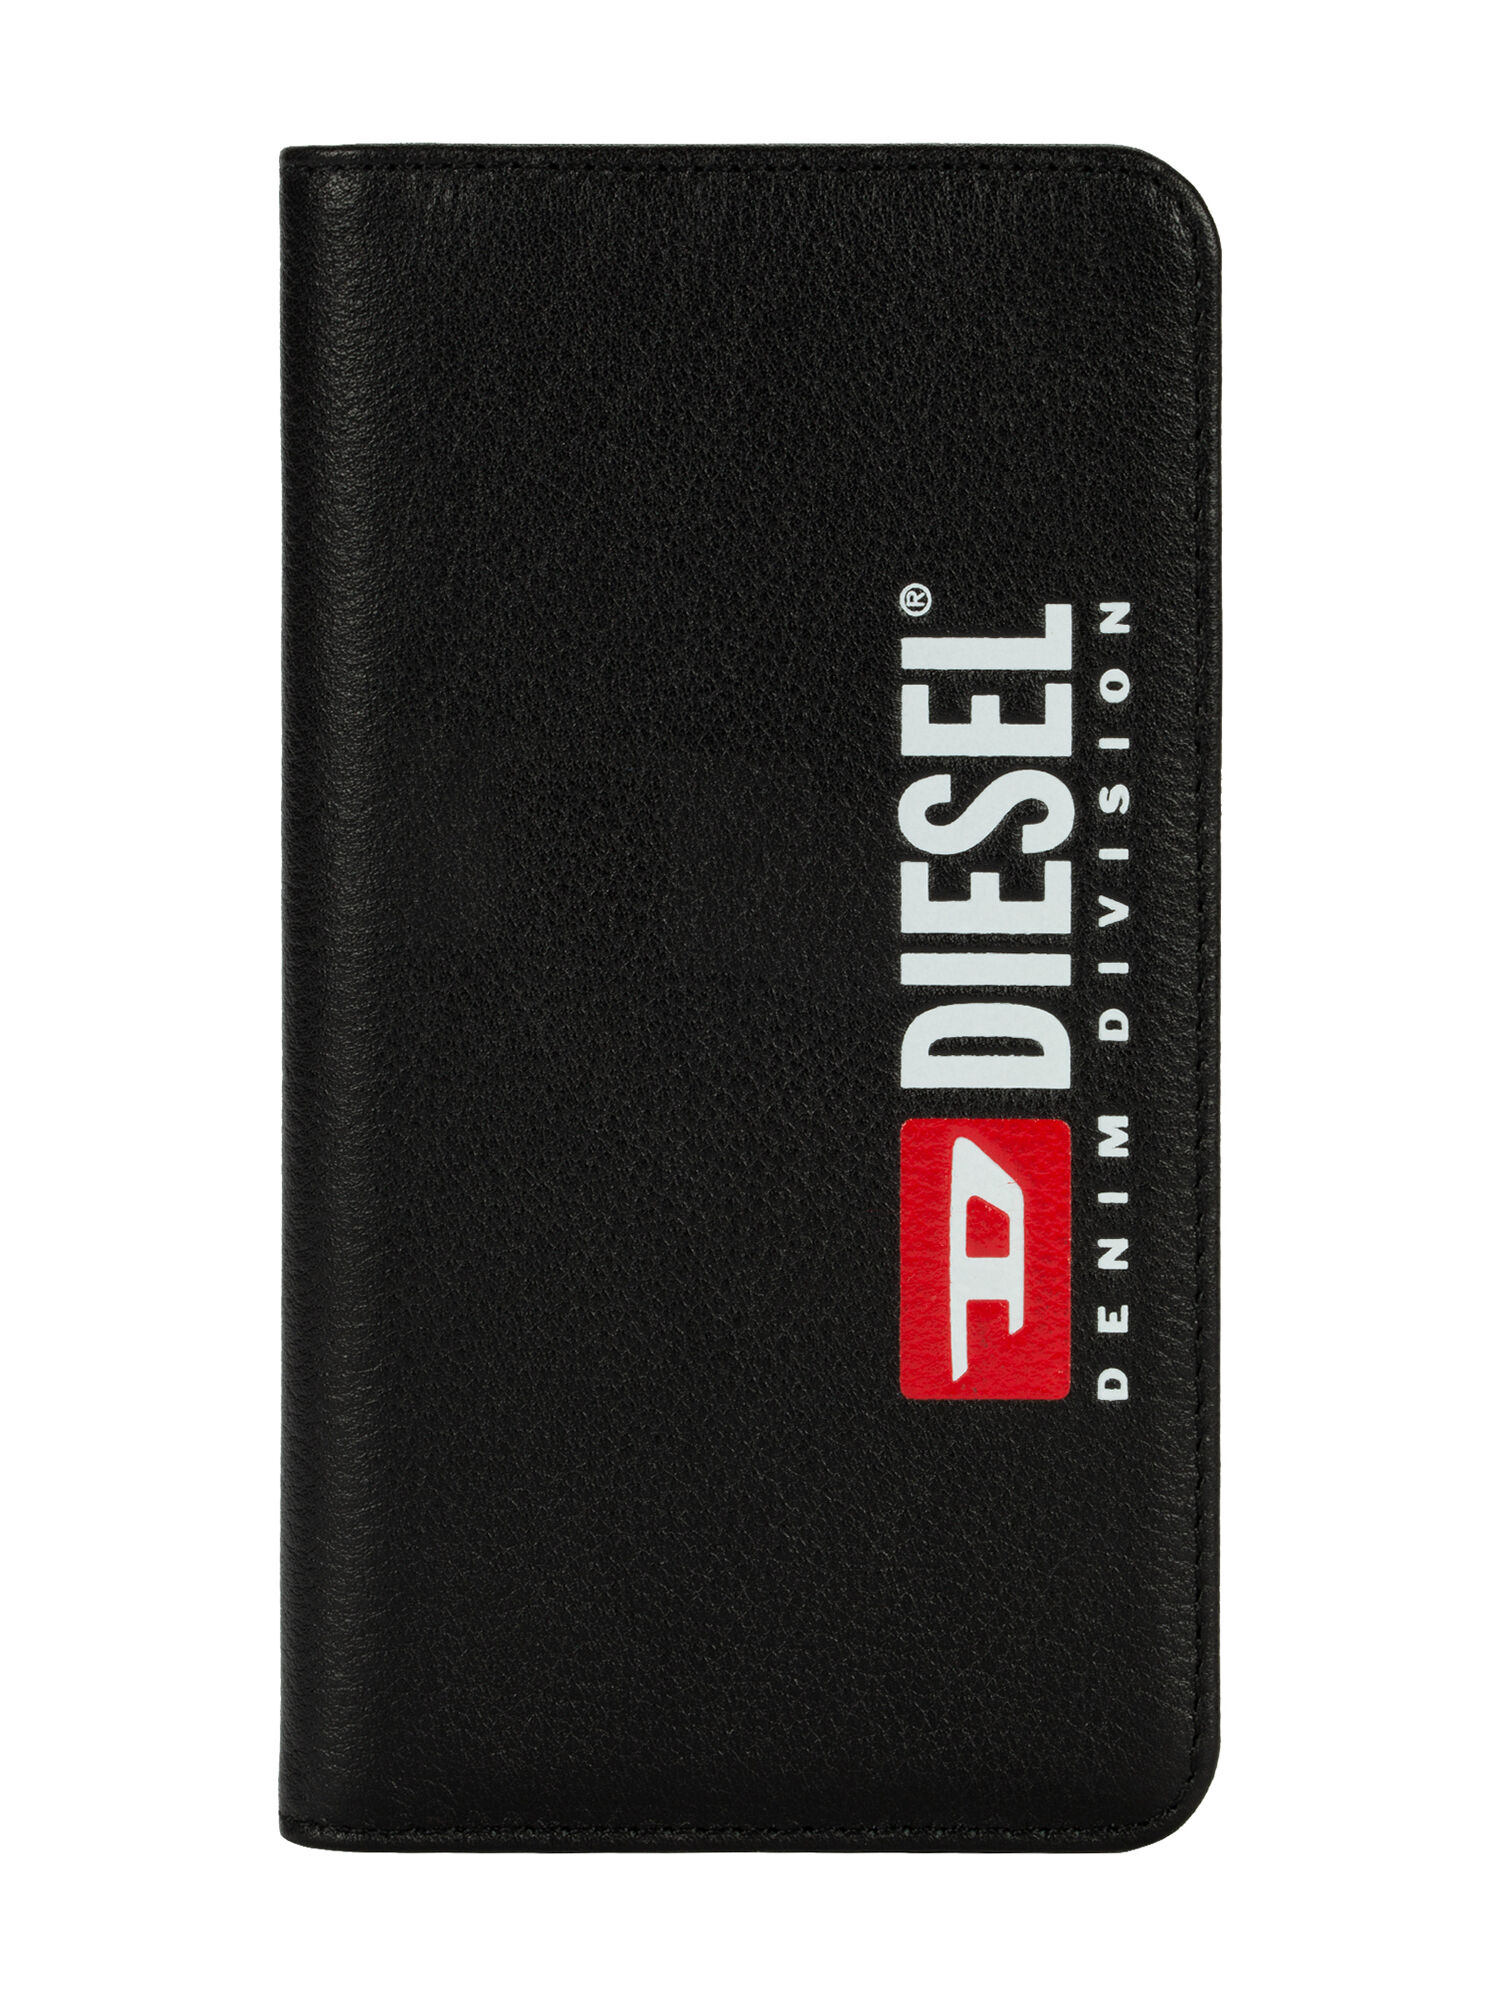 Diesel - DIESEL 2-IN-1 FOLIO CASE FOR IPHONE XS MAX,  - Image 1